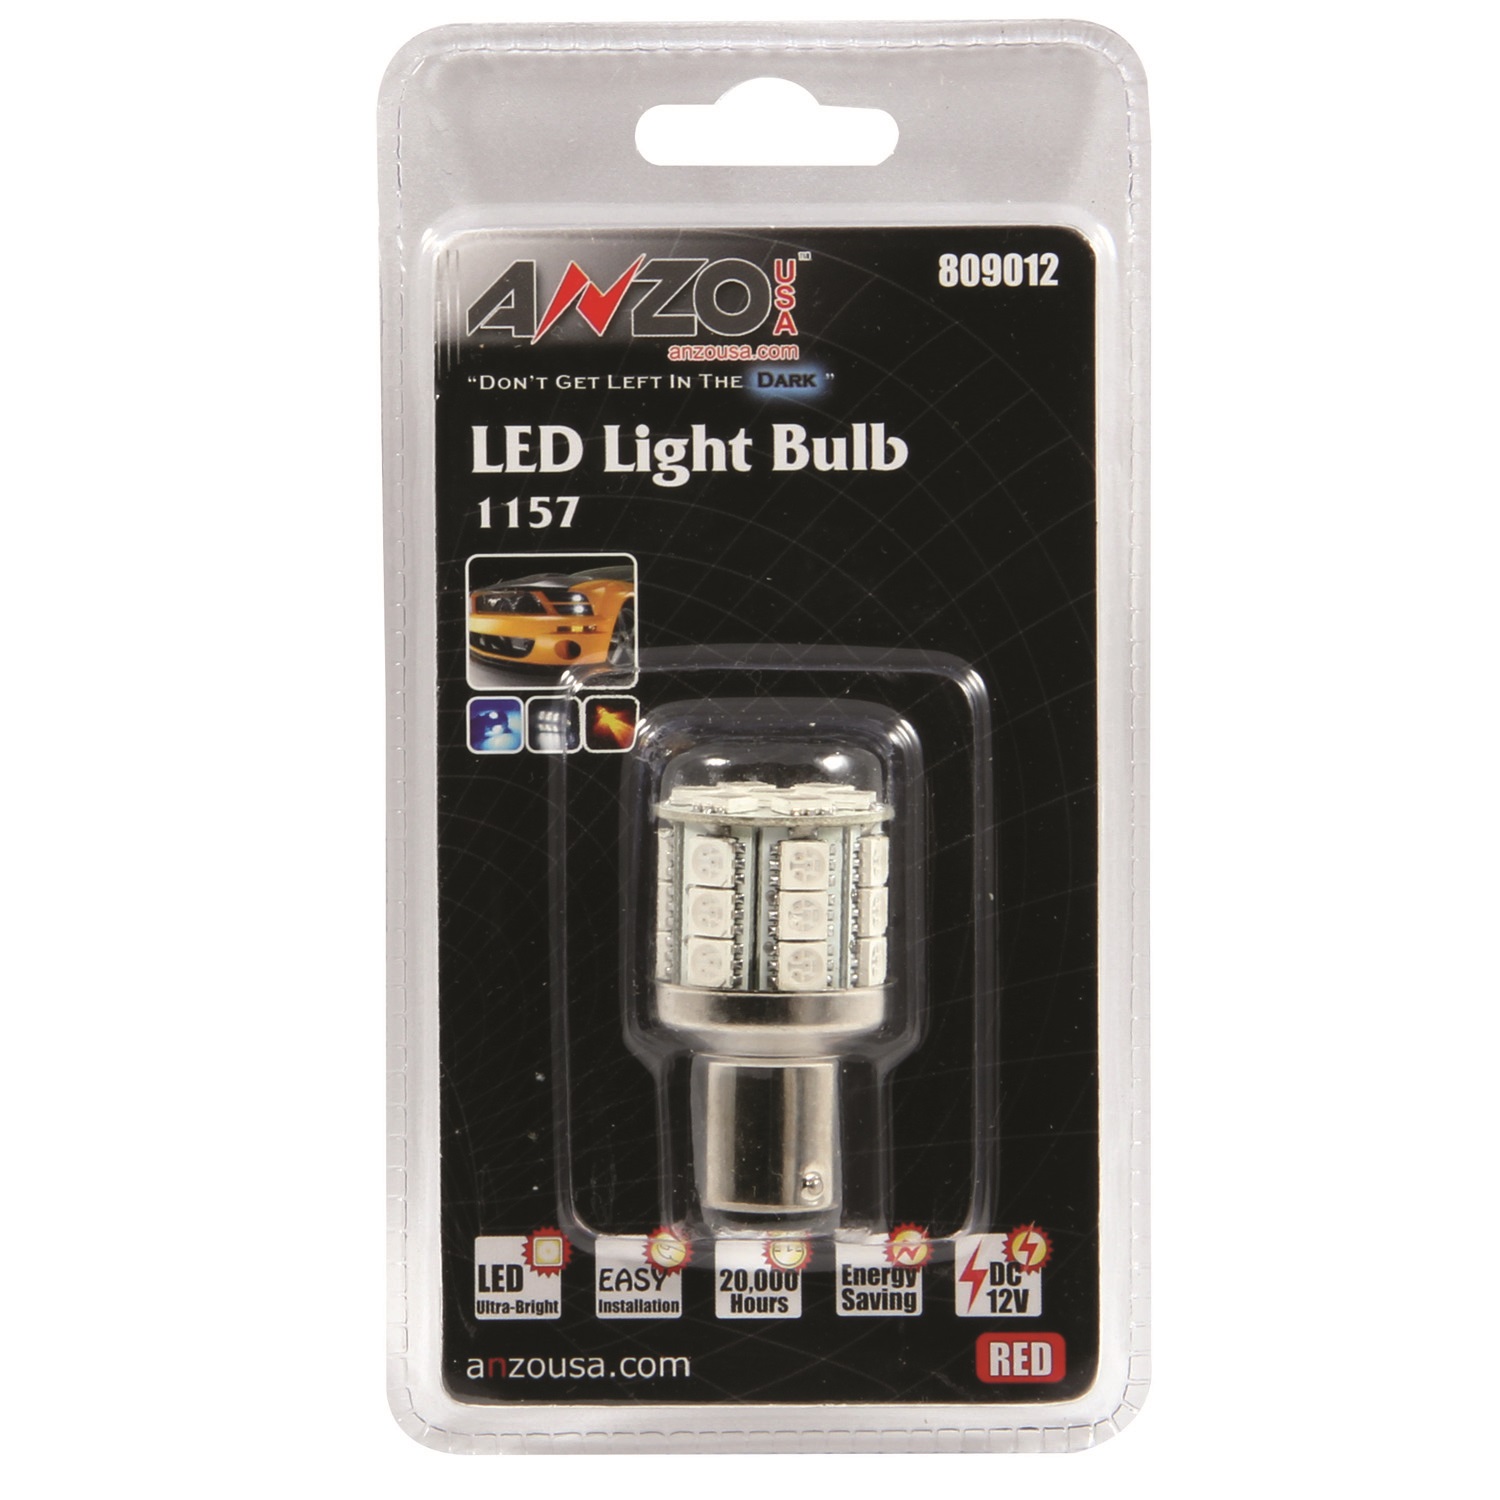 Anzo USA Anzo USA 809012 LED Replacement Bulb